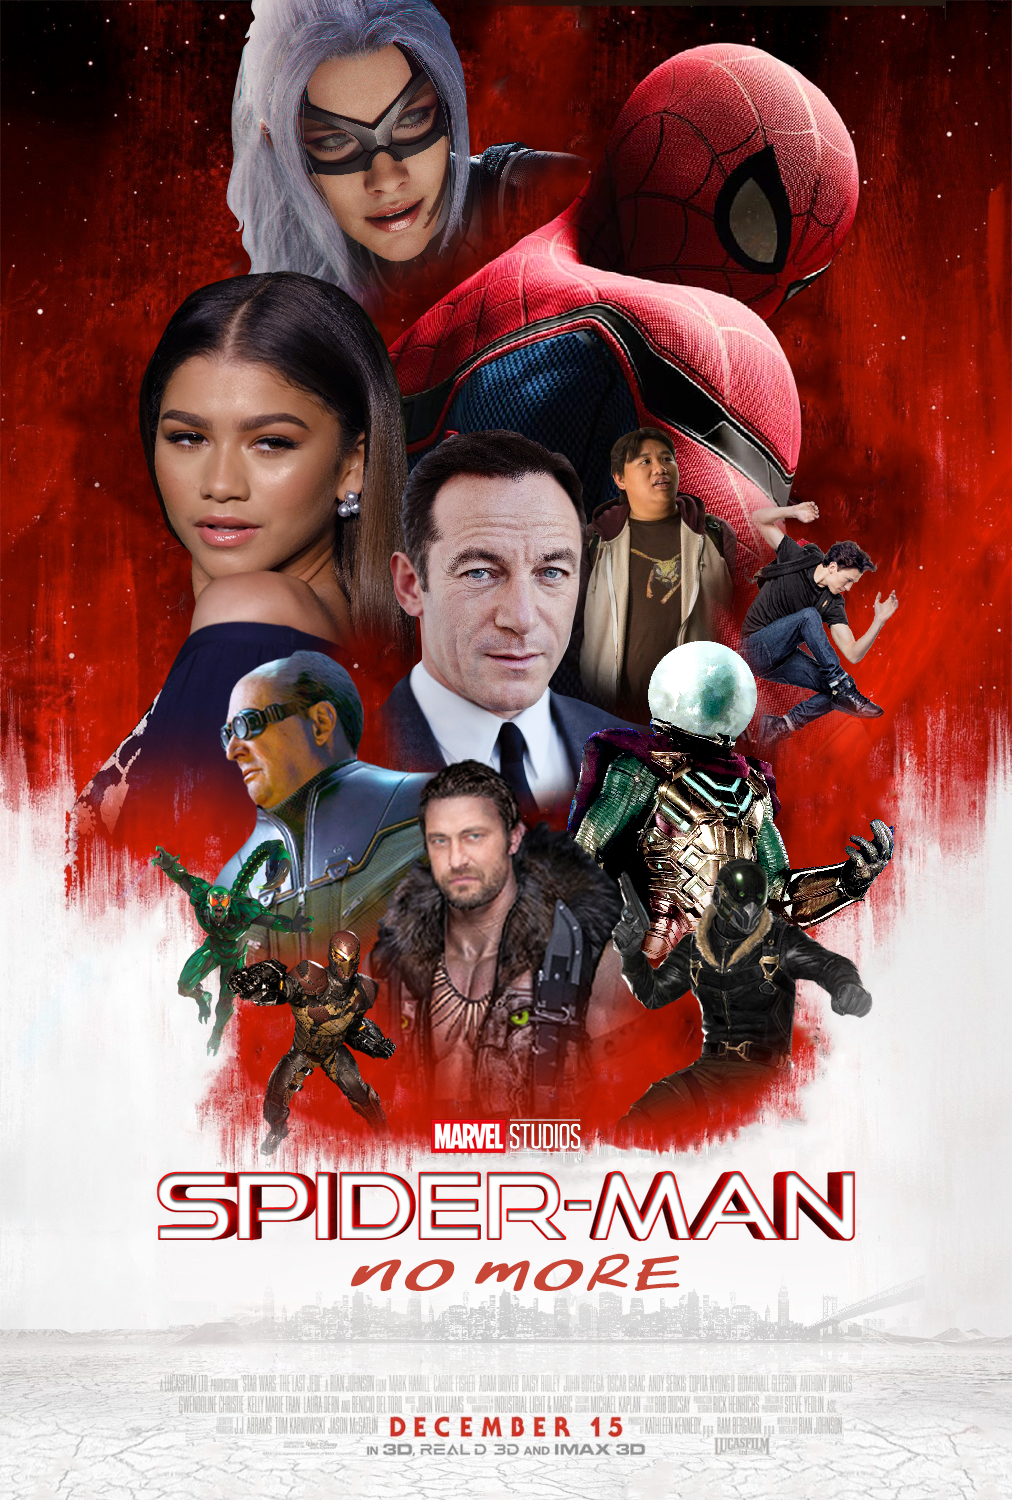 Spiderman 5: Web of Shadows Poster by SUPER-FRAME on DeviantArt